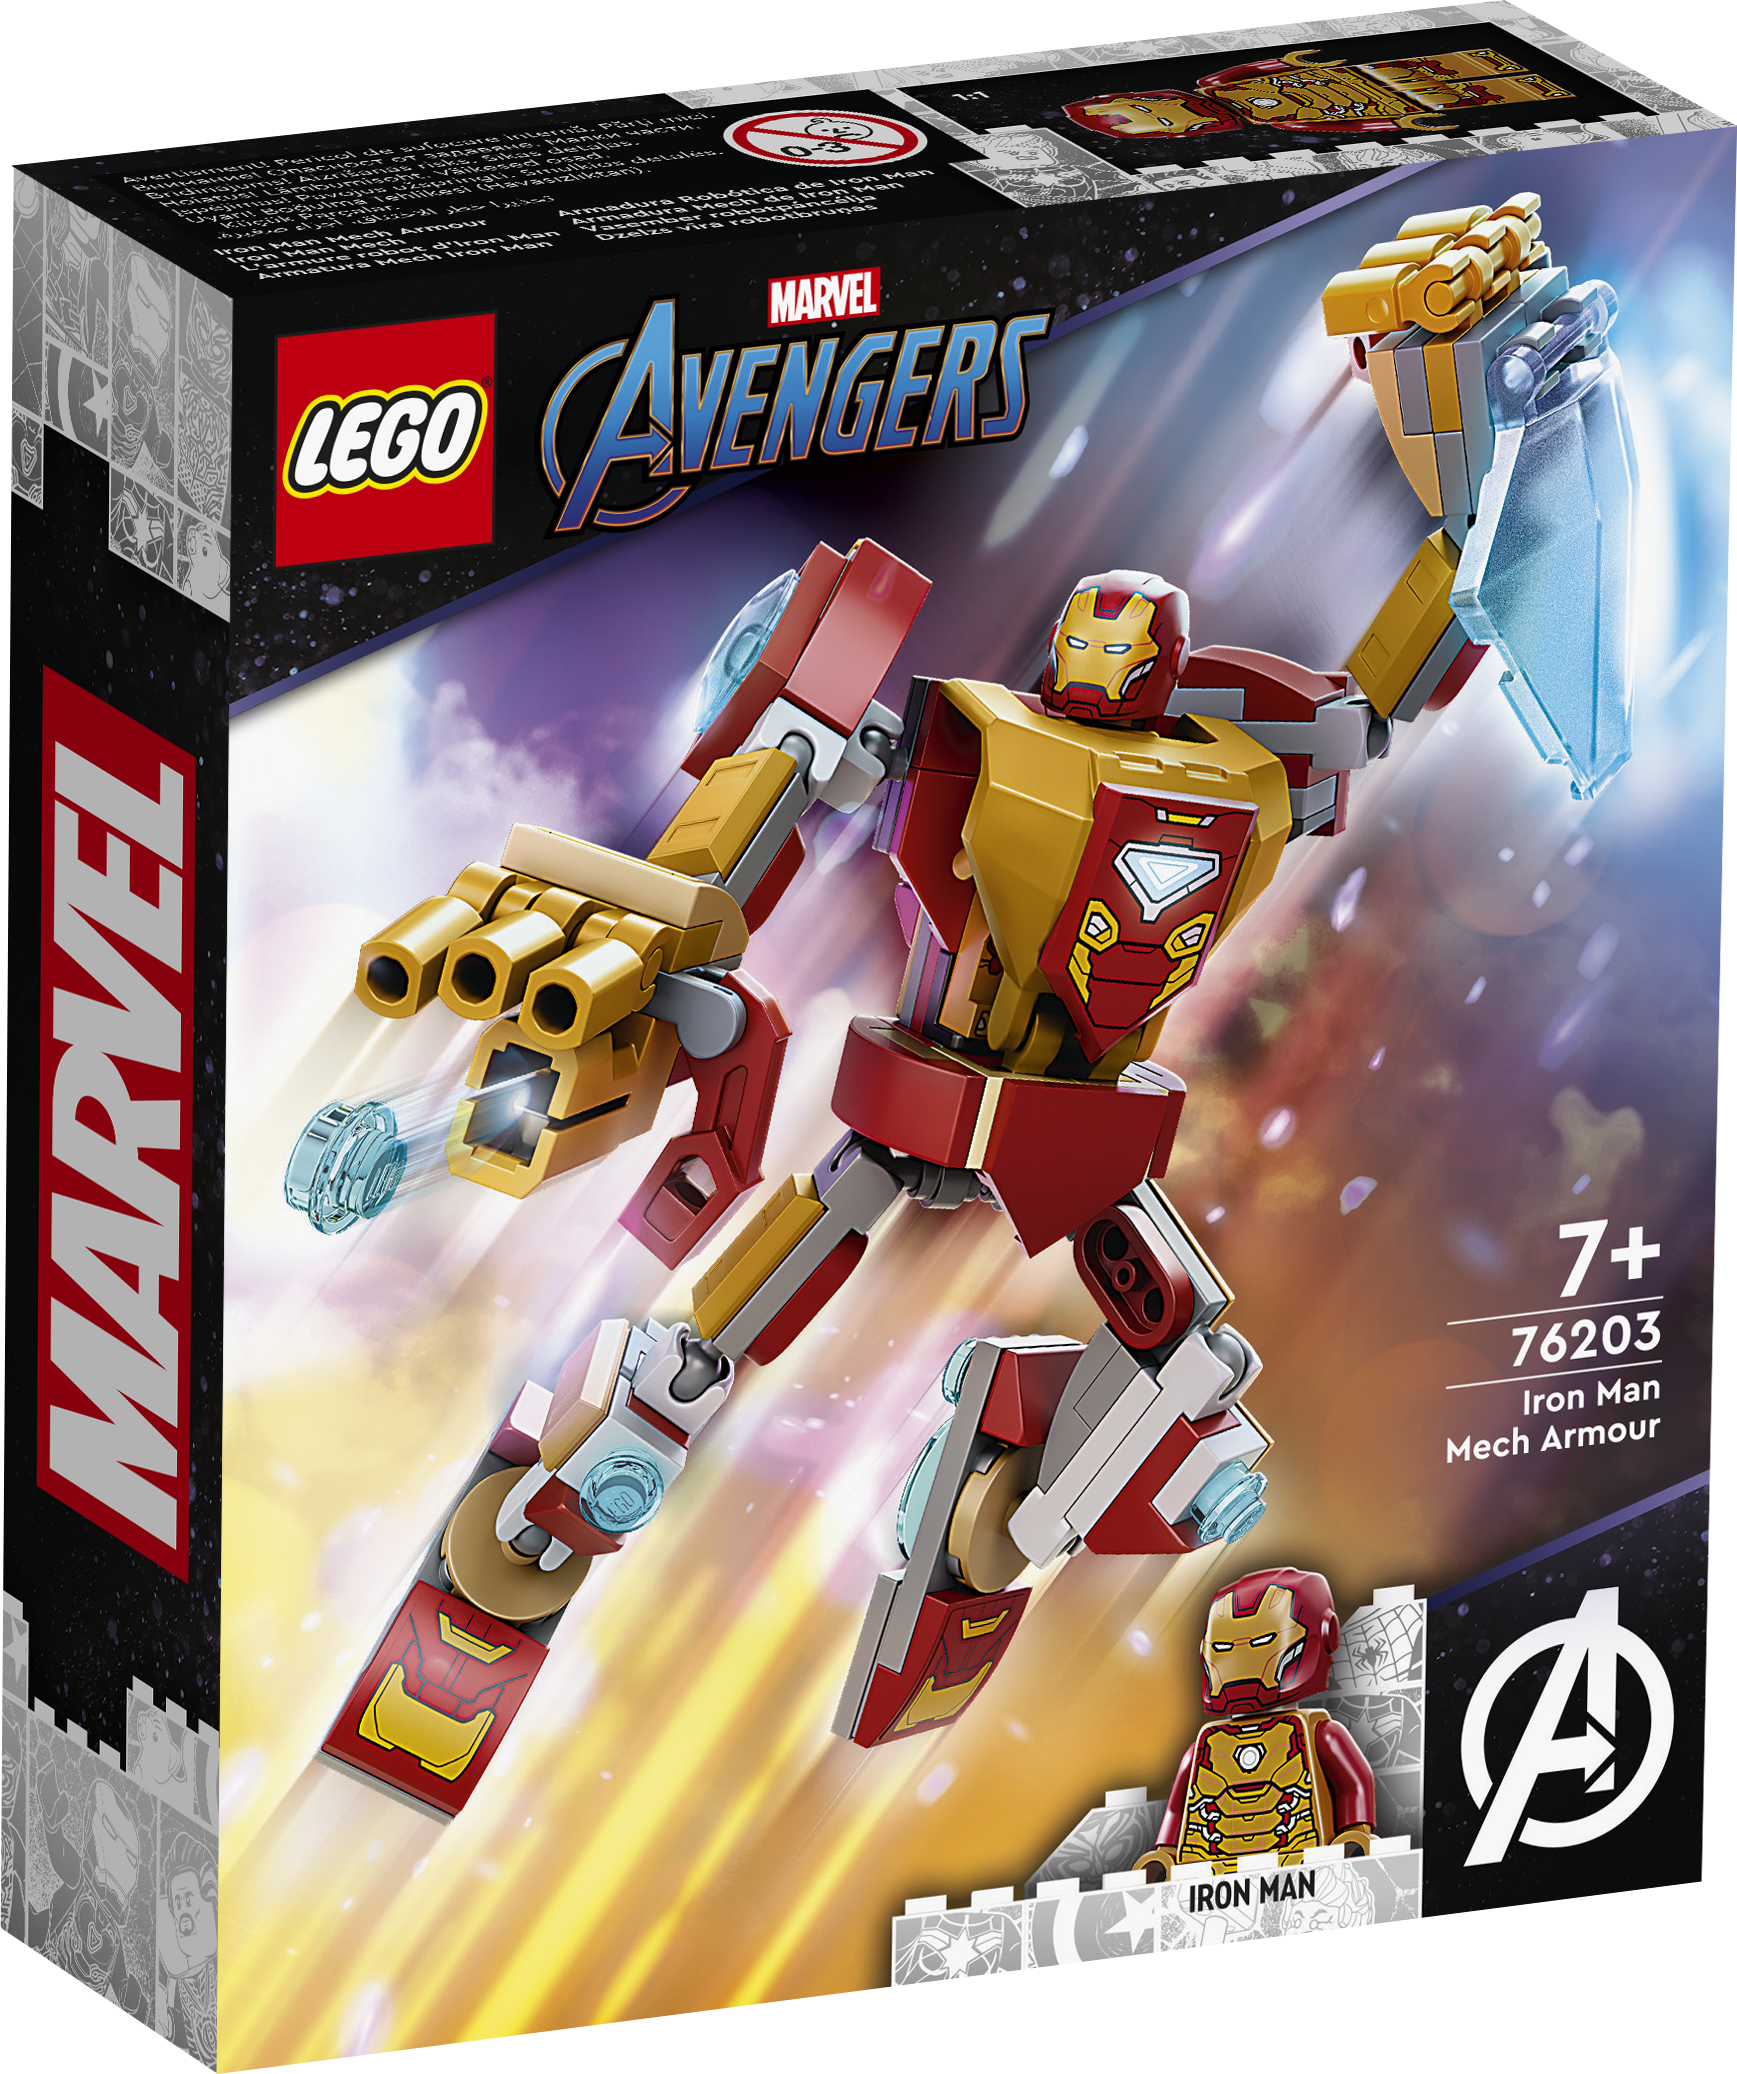  Super Hero Iron Mans Kamprobot - 76203